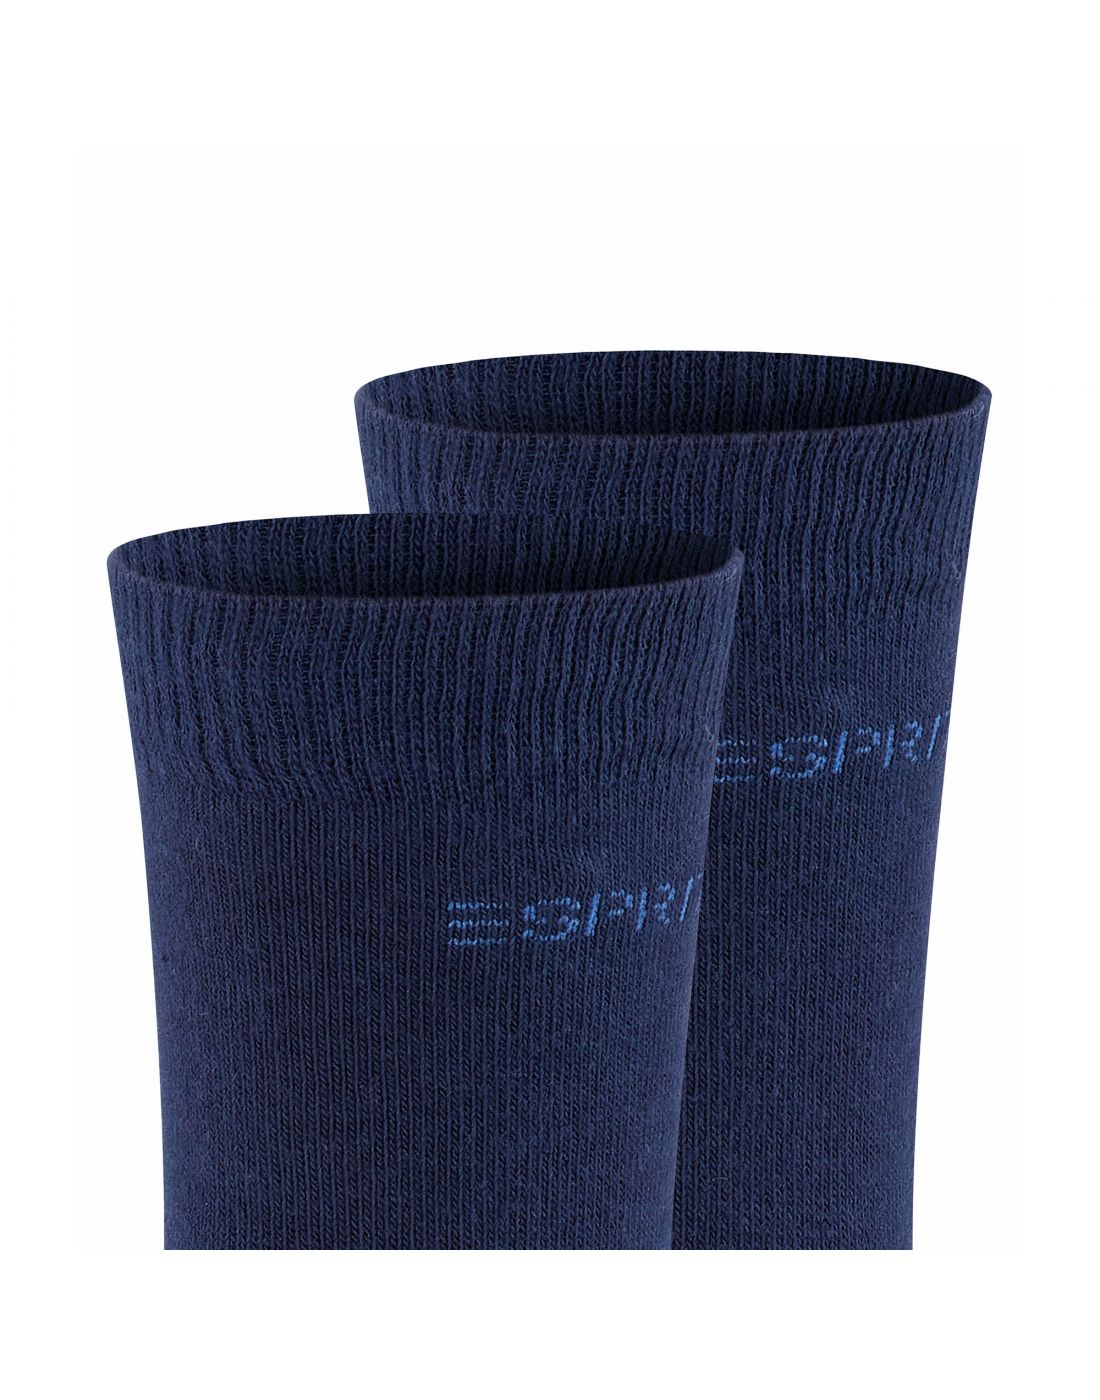 Esprit Kids Socks